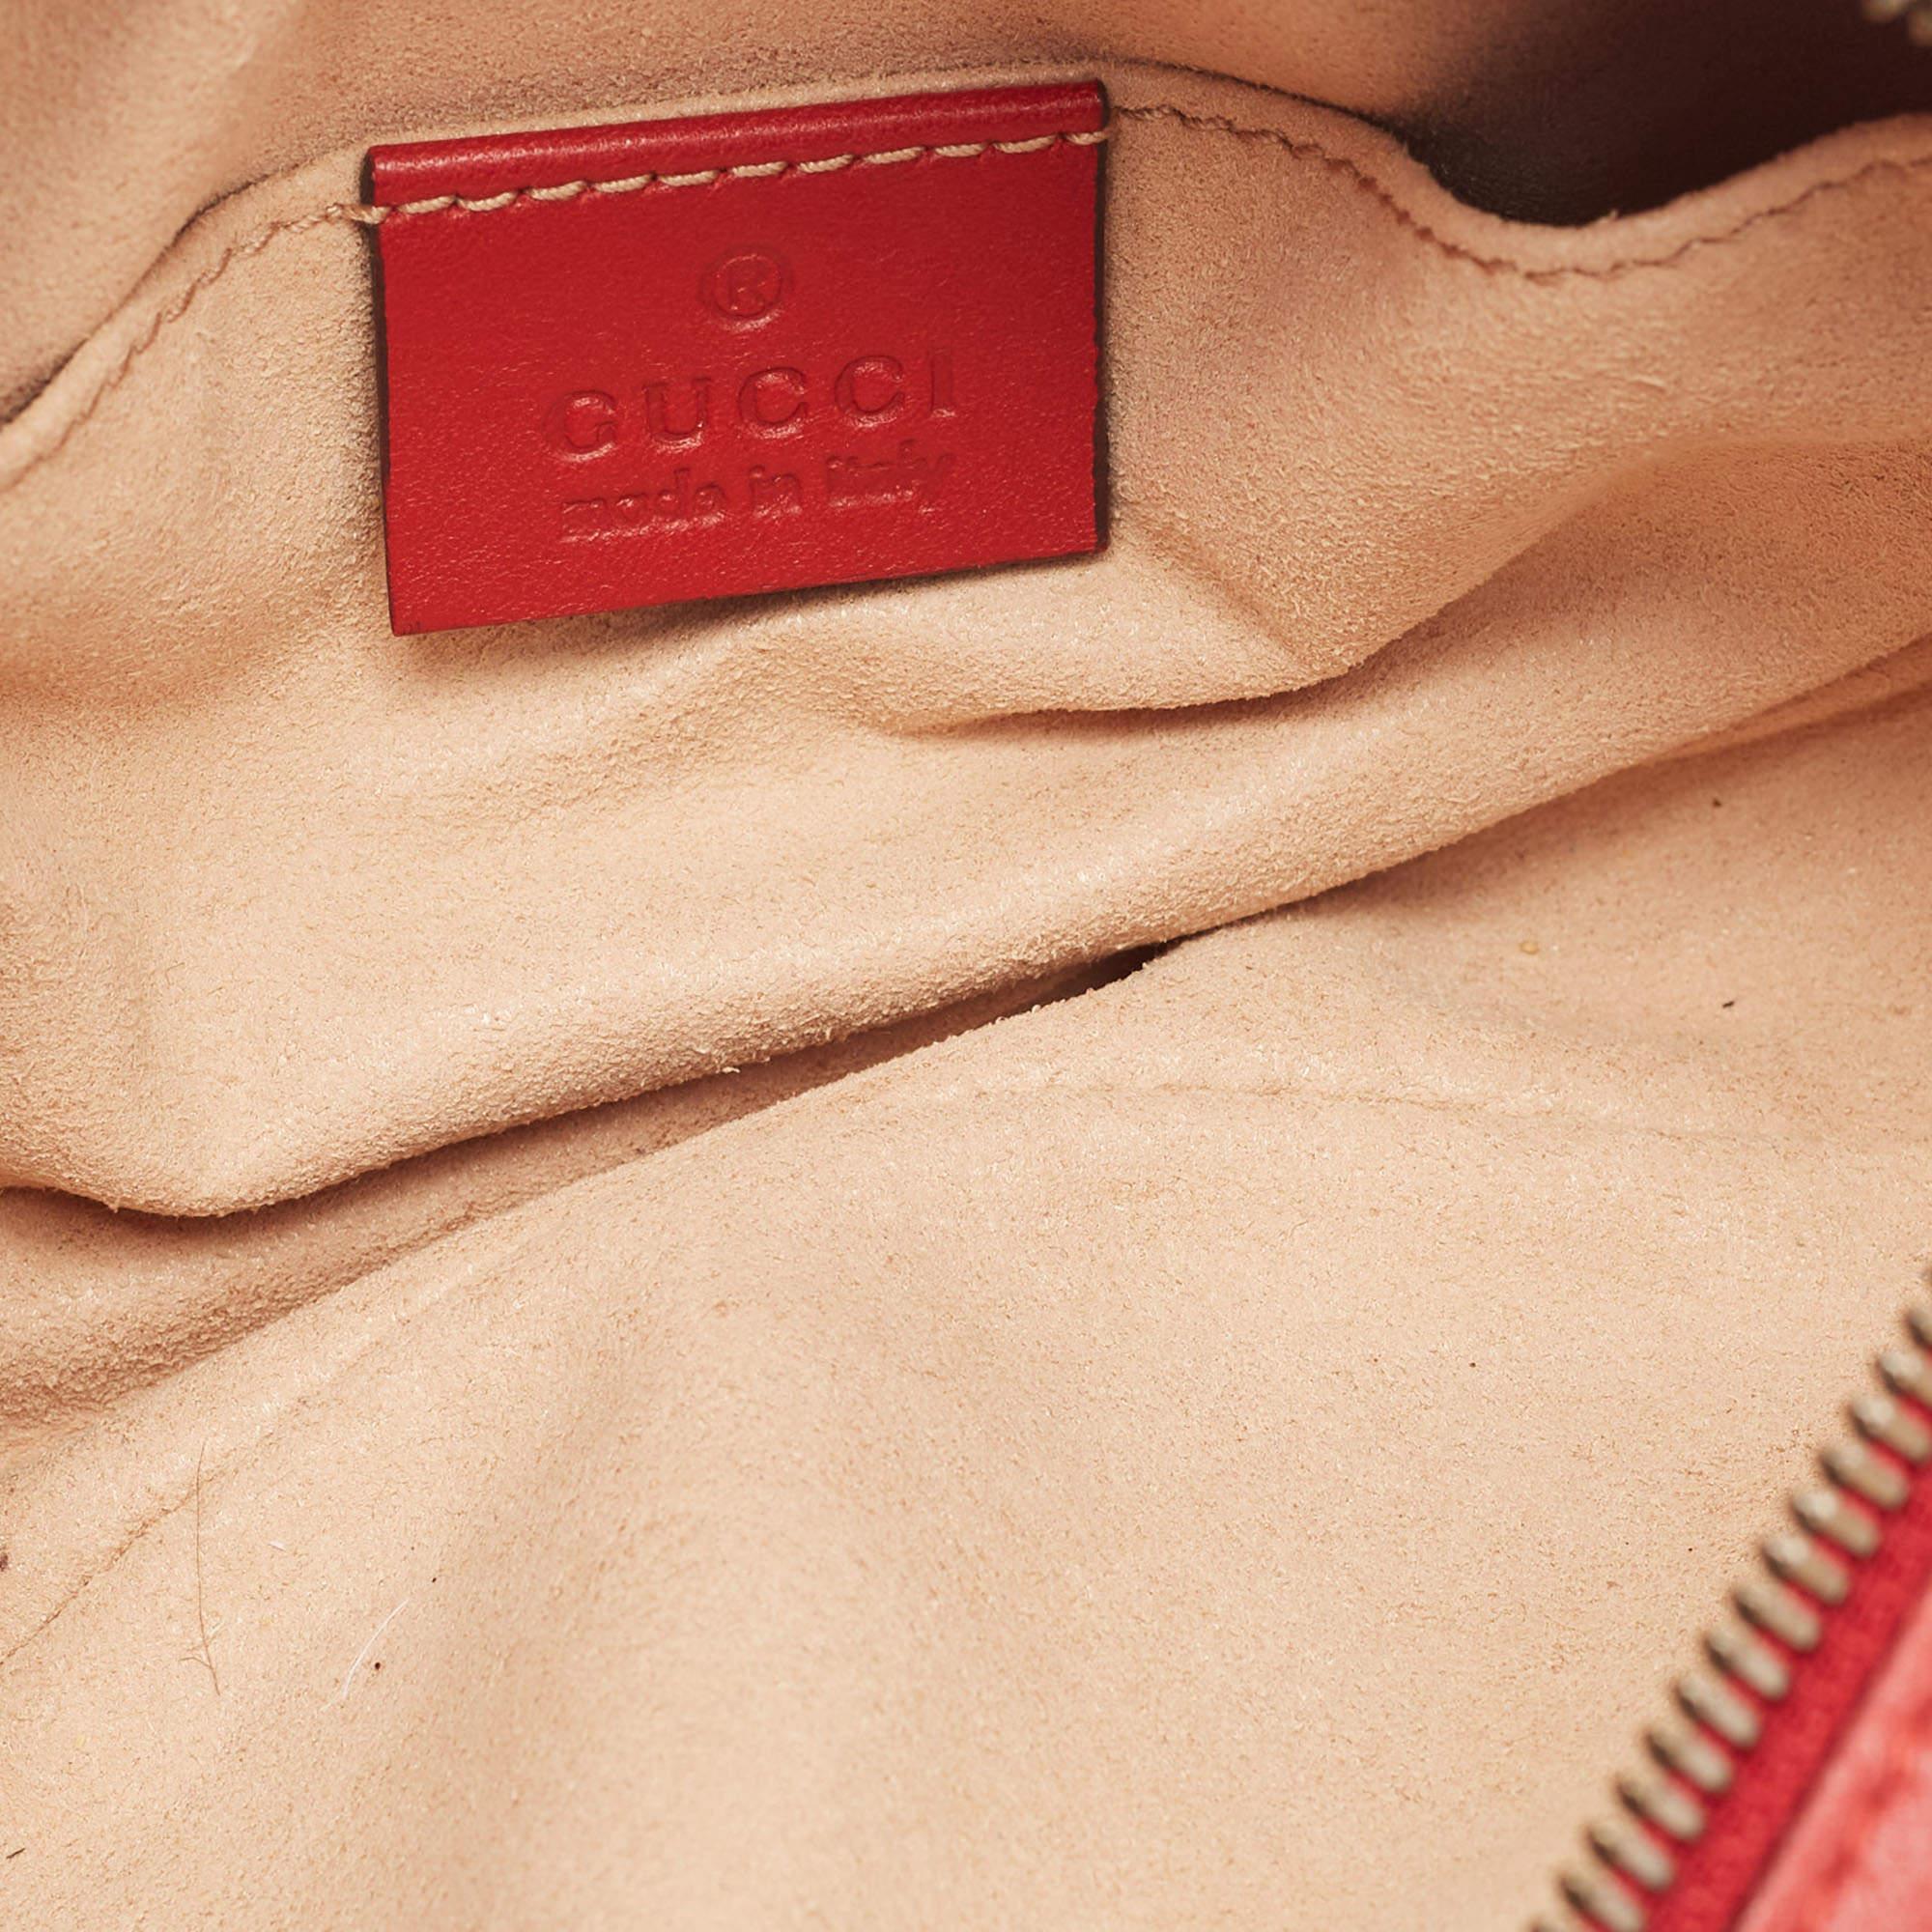 Gucci Red Matelassé Leather GG Marmont Belt Bag 2